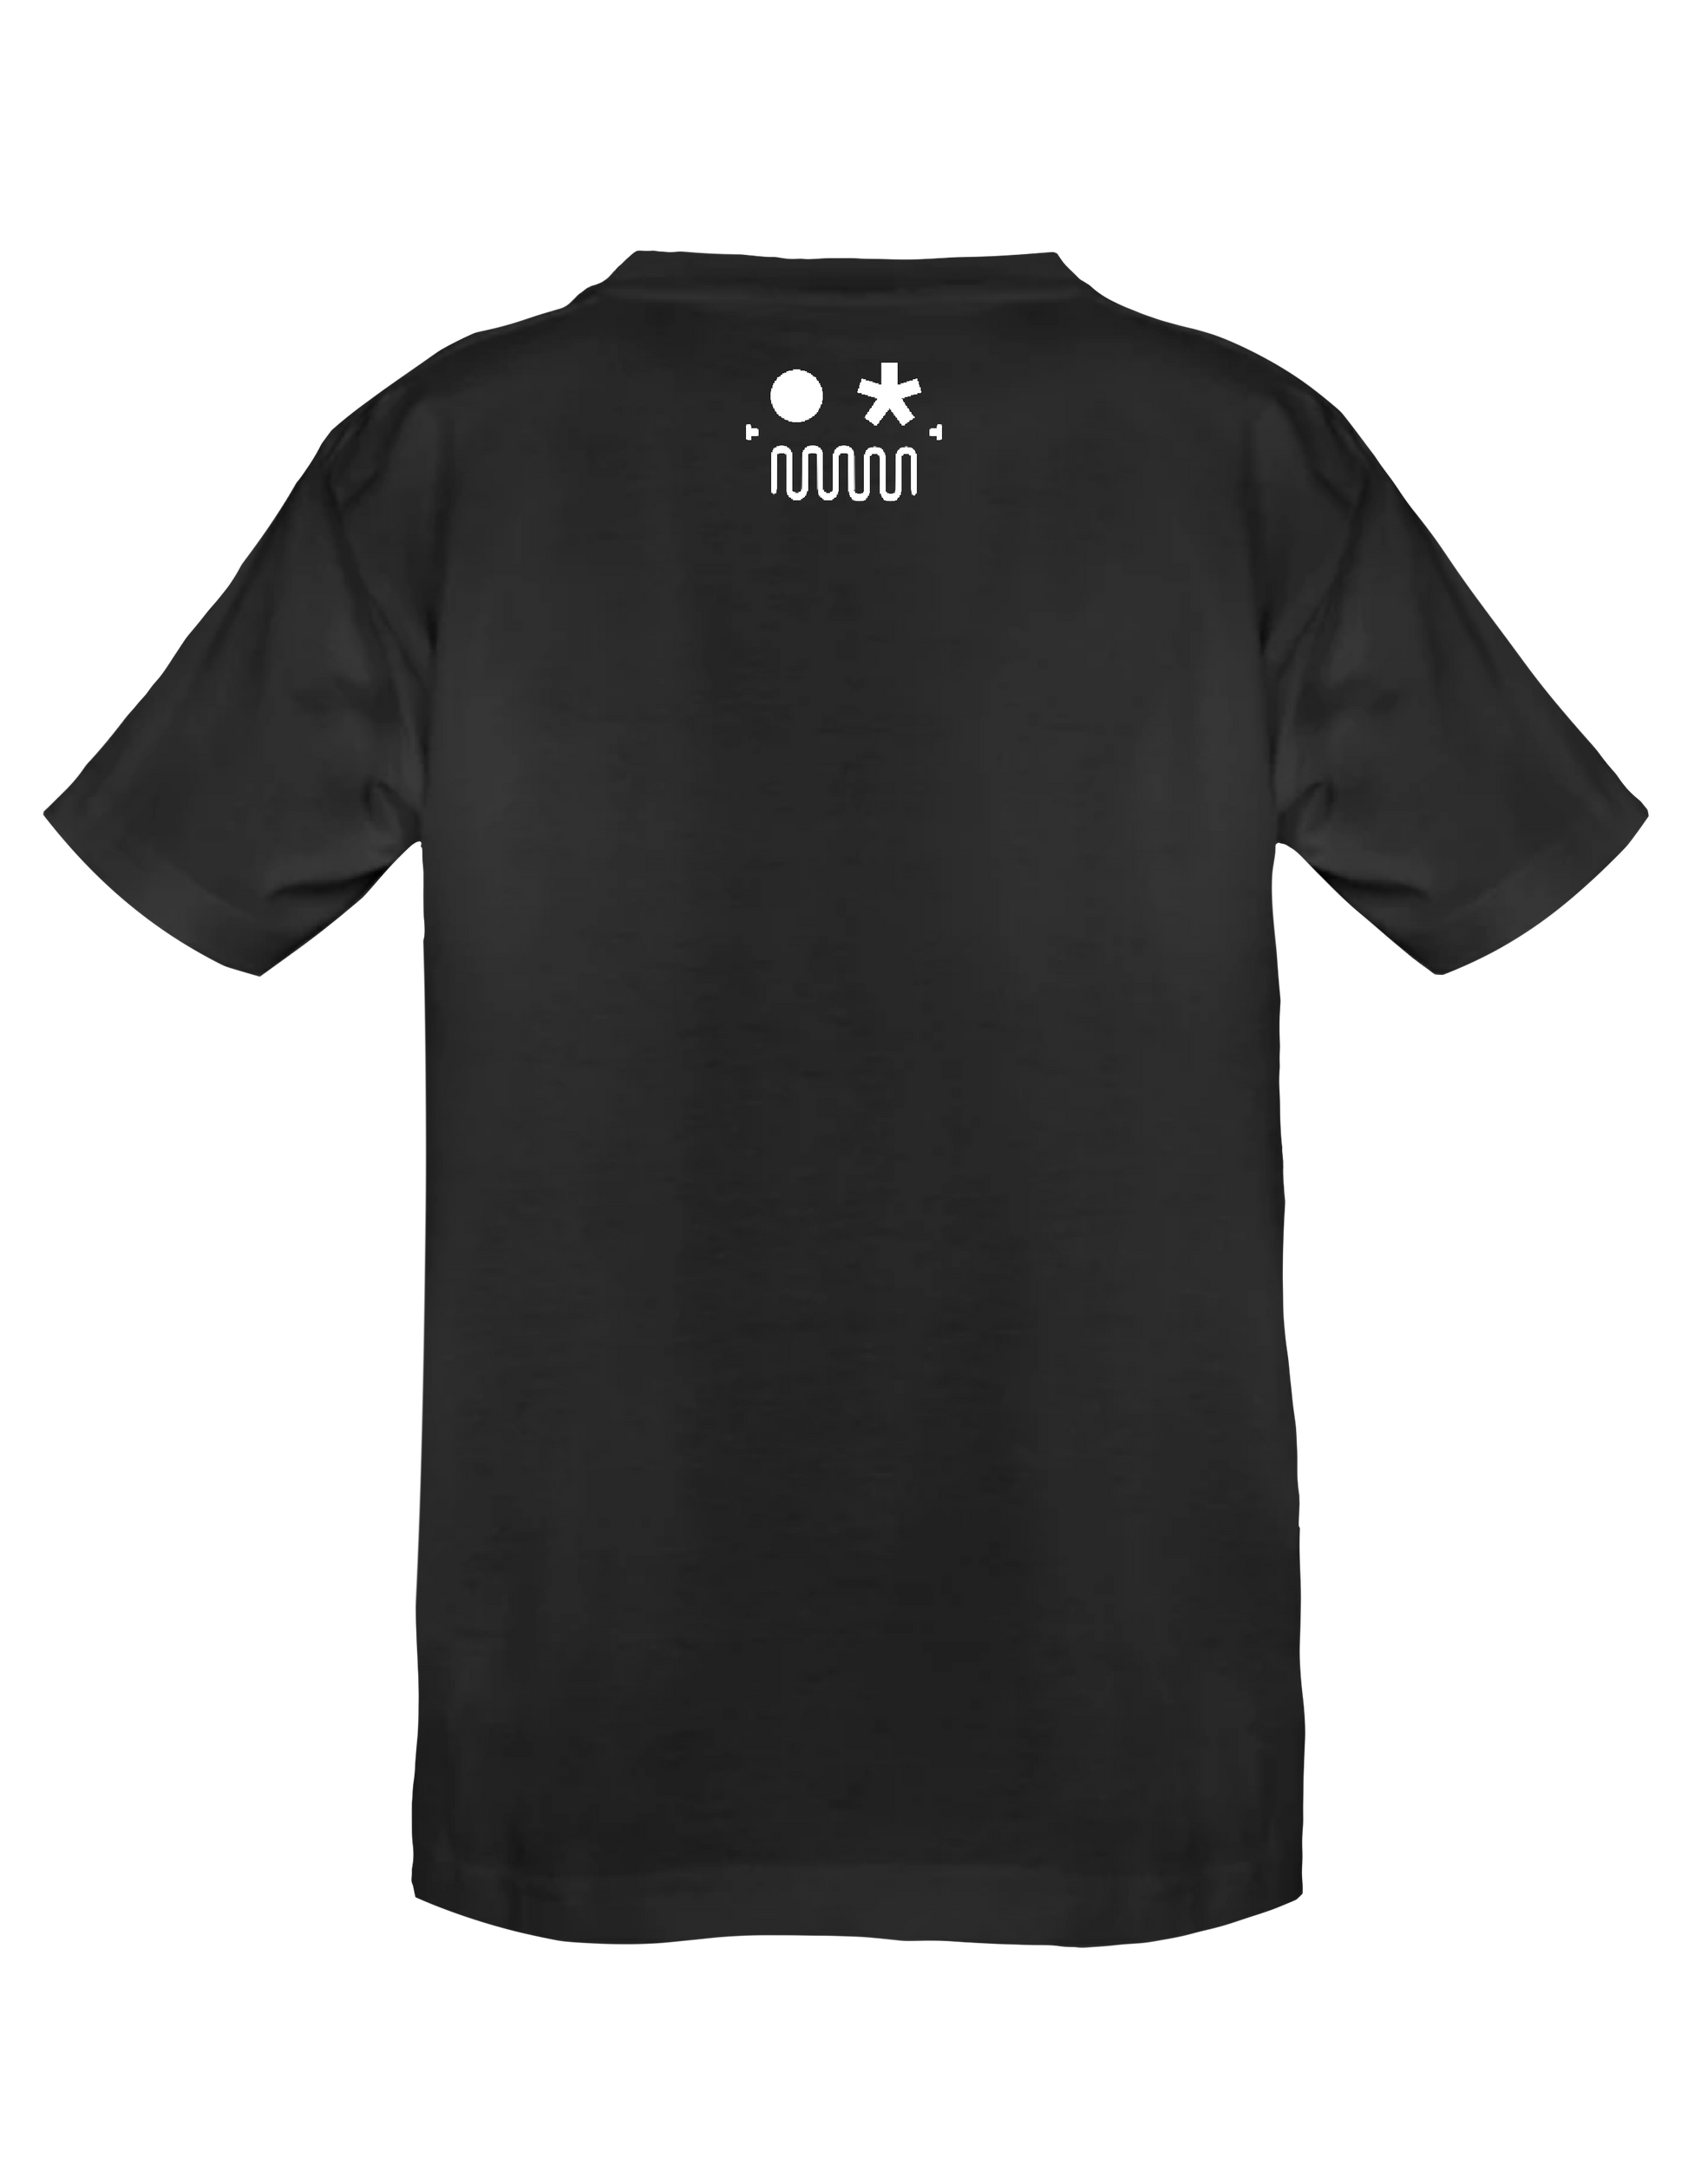 KENDRICK LAMAR - MR. MORALE* (Black) - T-Shirt by BOYSDONTDRAW